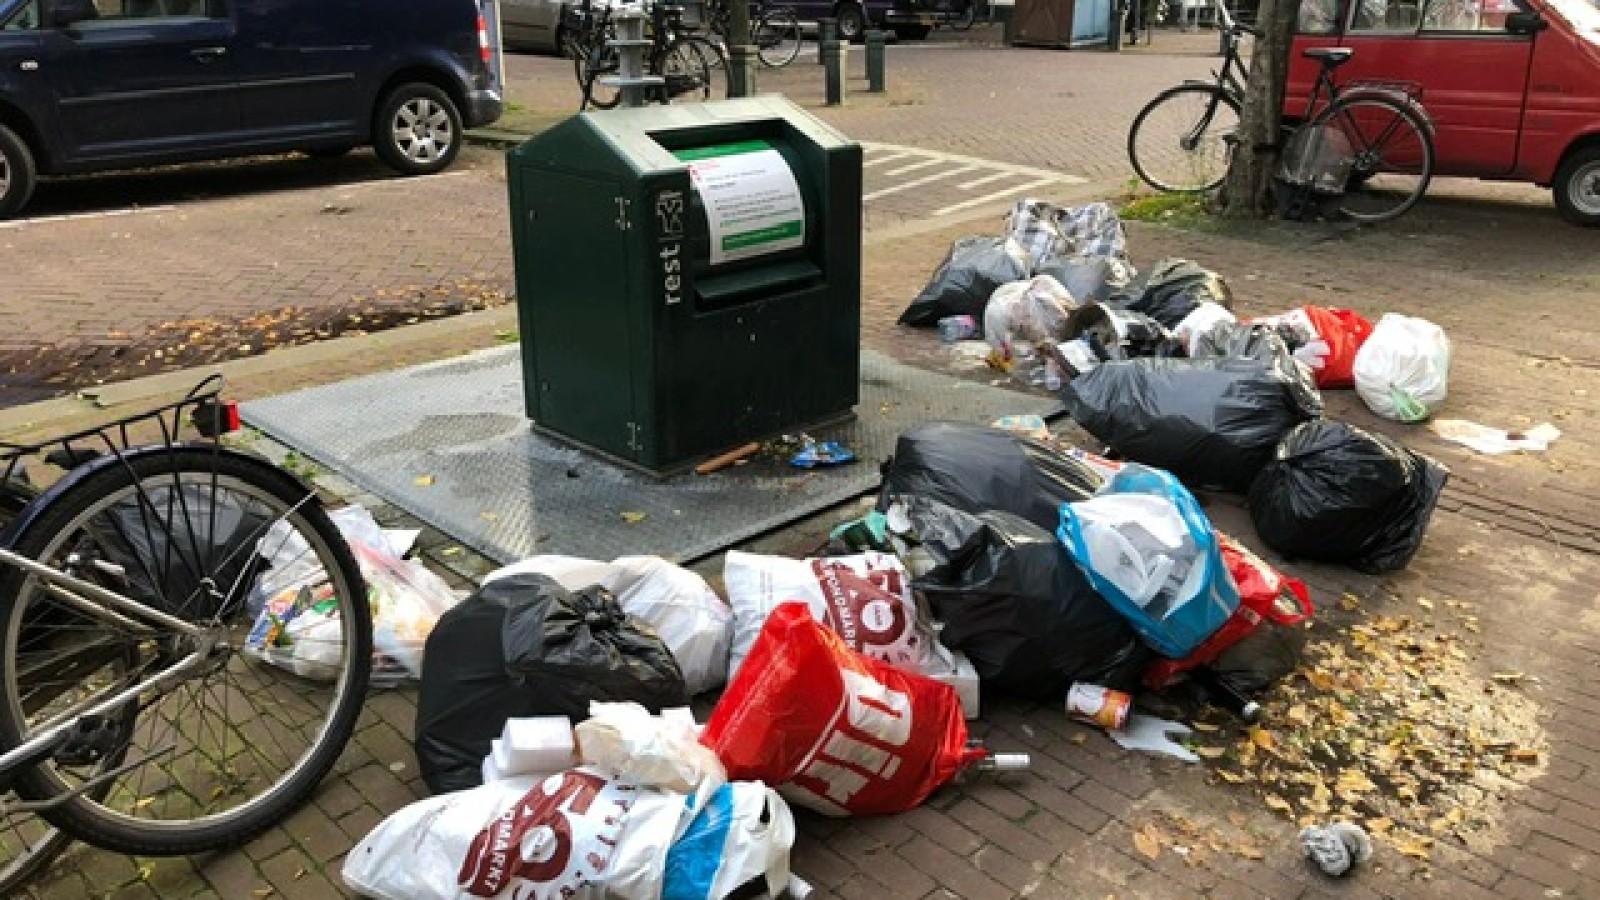 afval zwerfafval ingezonden foto's via panel@at5.nl